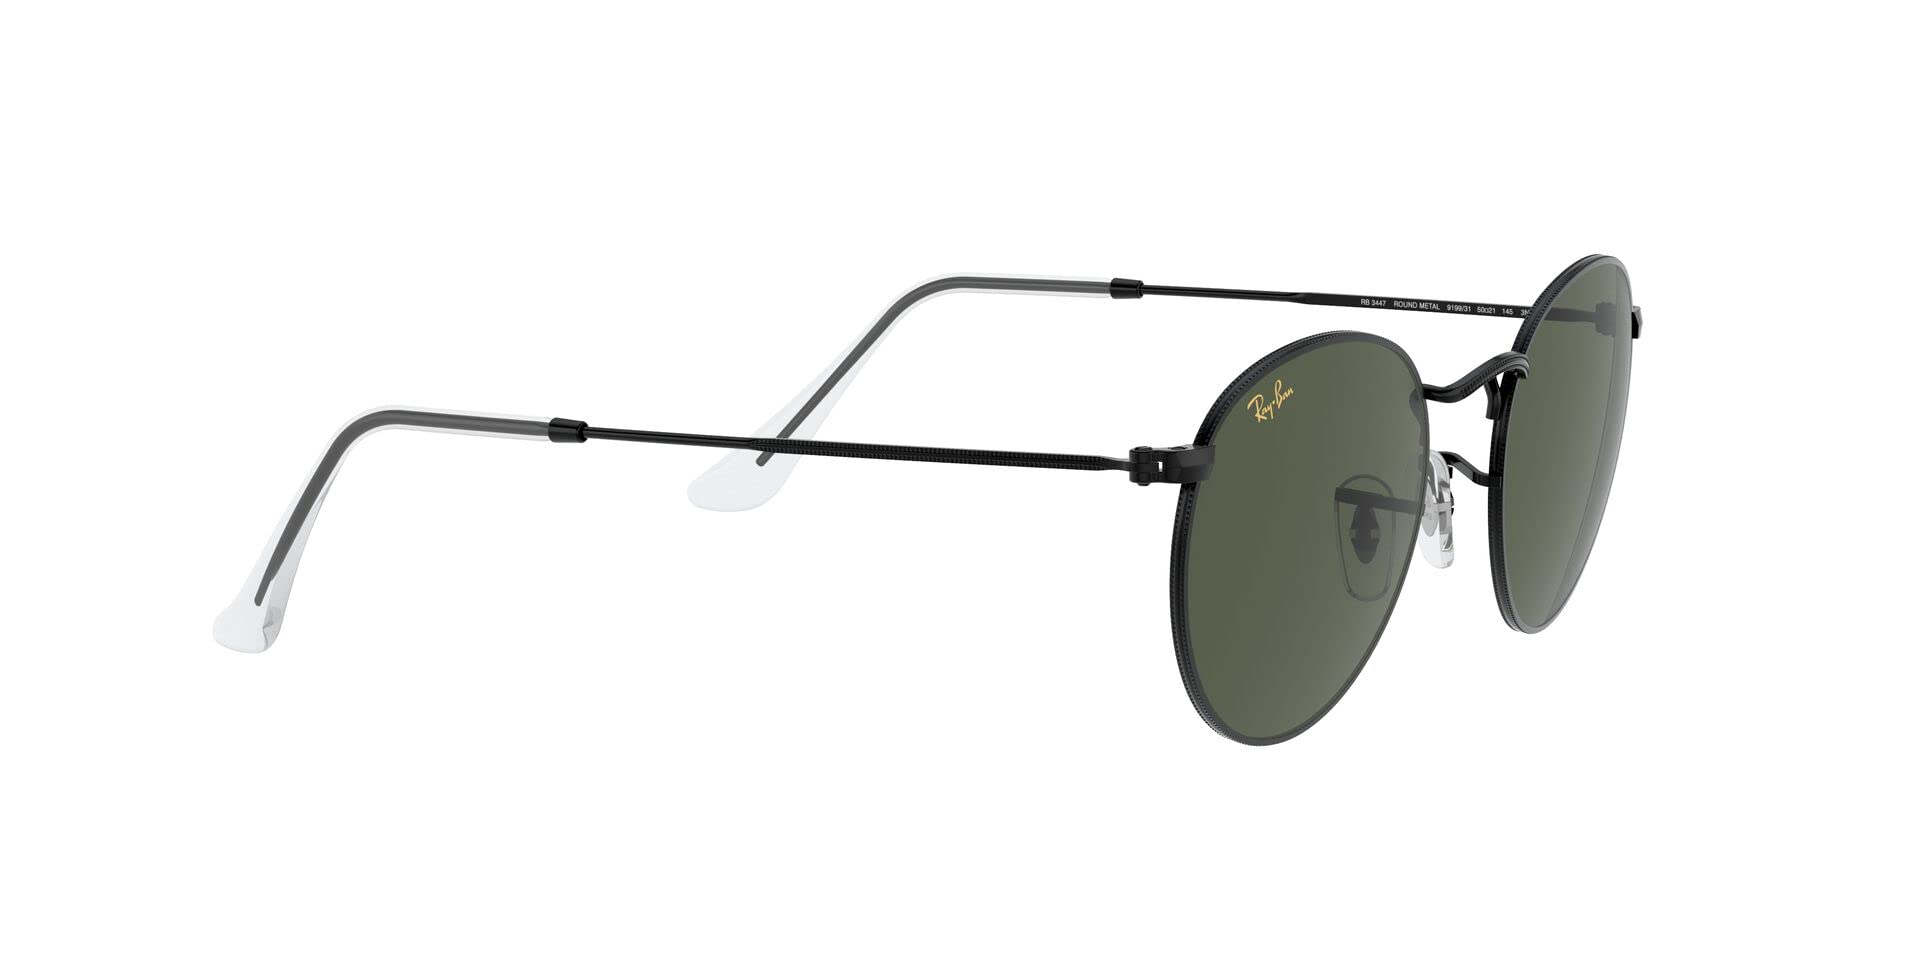 Ray-Ban Rb3447 Round Metal Sunglasses